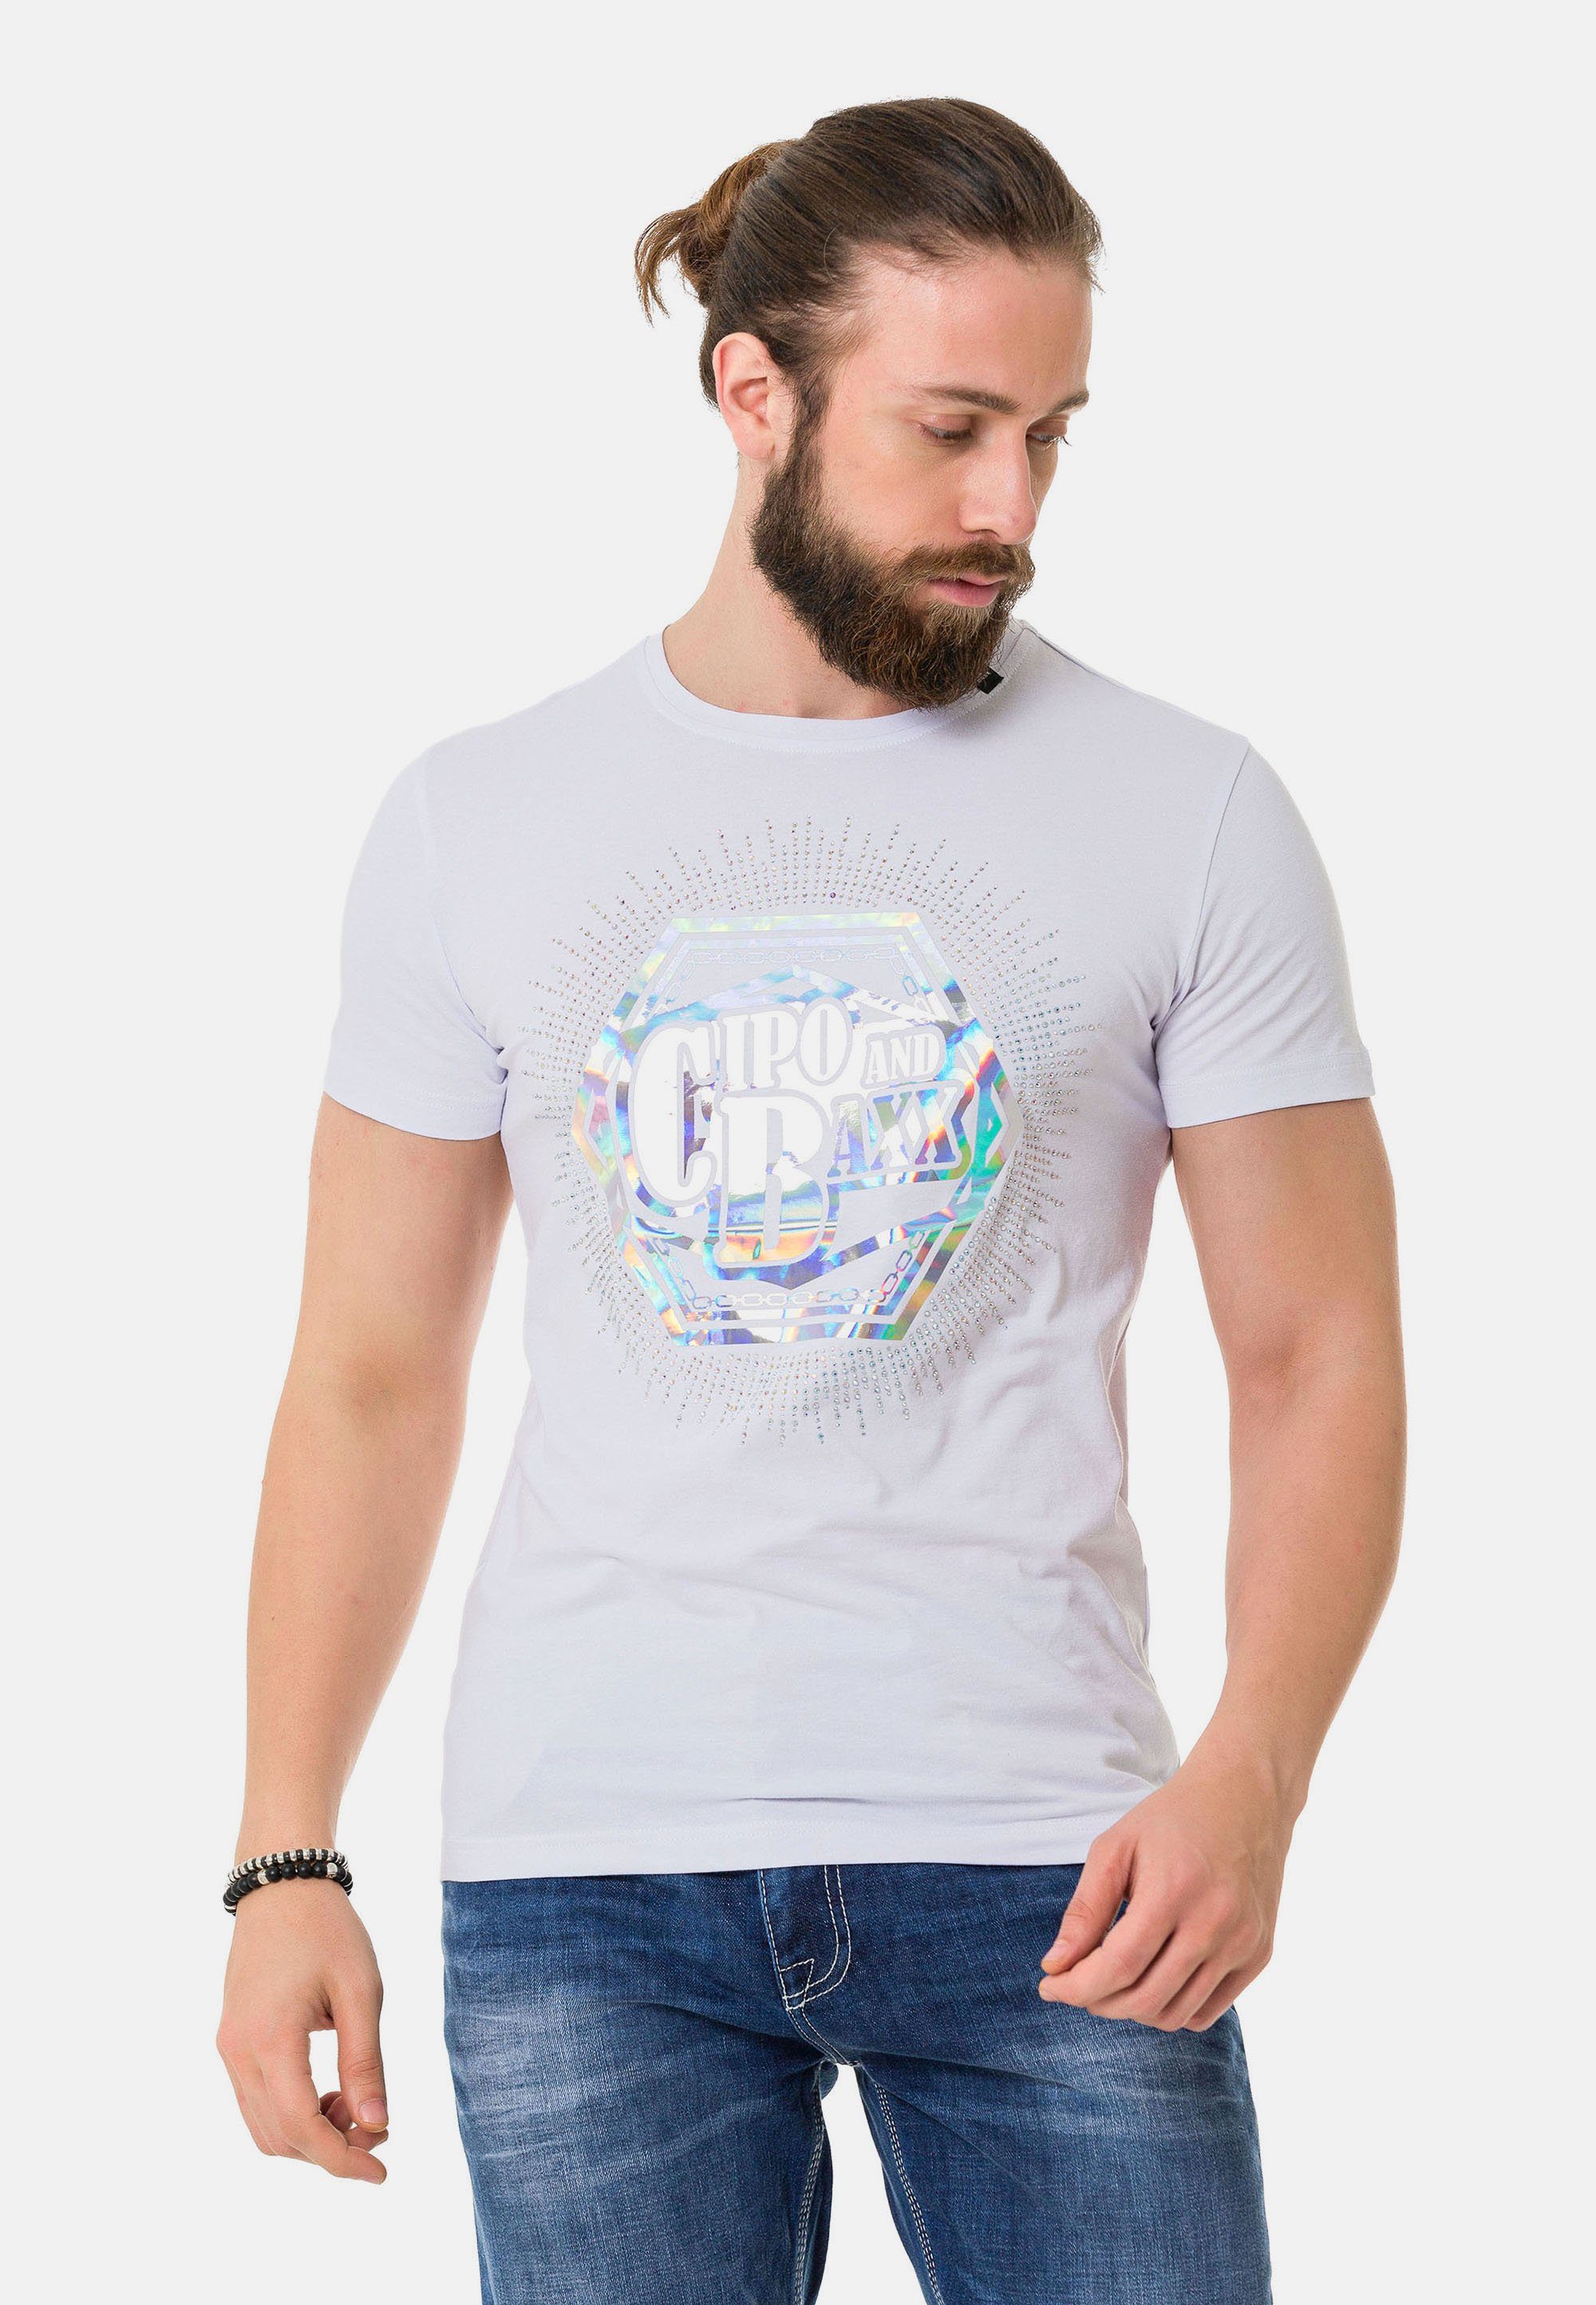 Cipo & Baxx T-Shirt mit farbenfrohem Marken-Schriftzug weiß